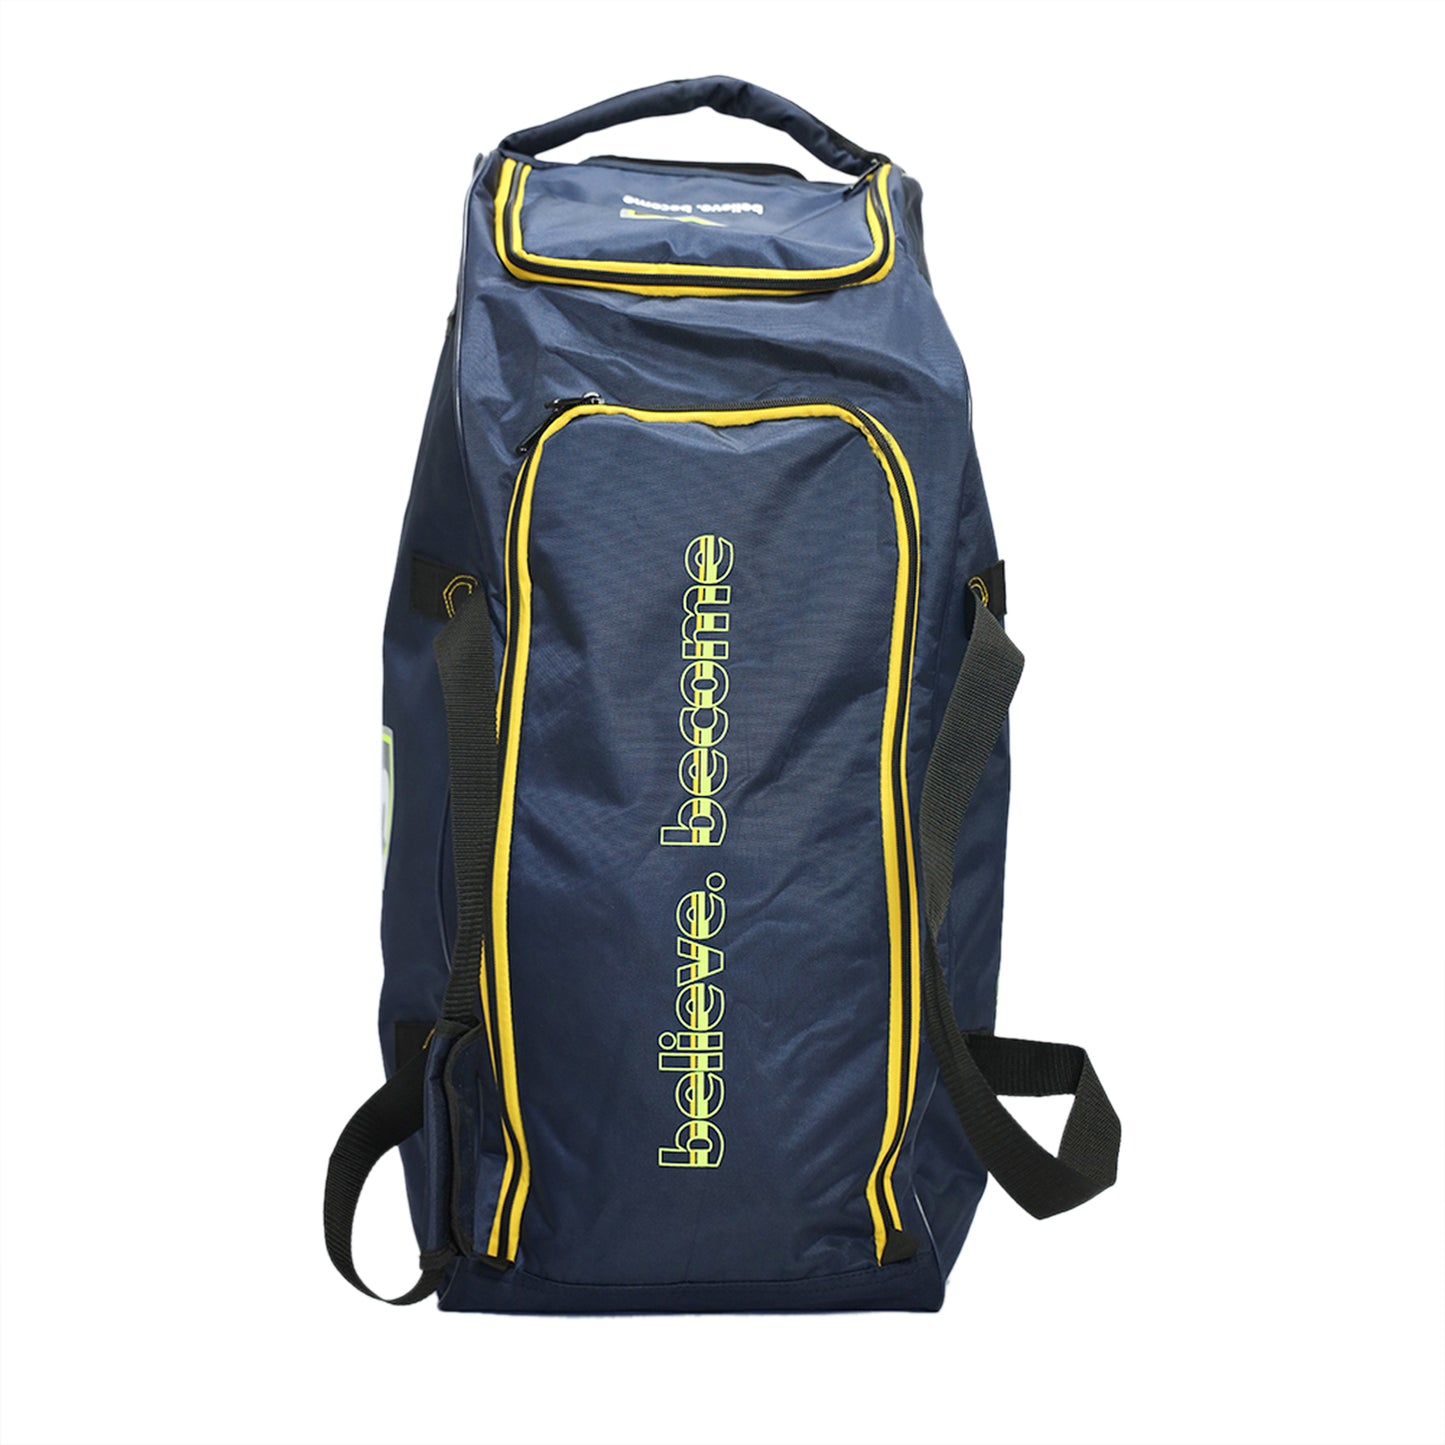 SG ExtremePak Plus Trolley Cricket Kitbag, Large - Best Price online Prokicksports.com